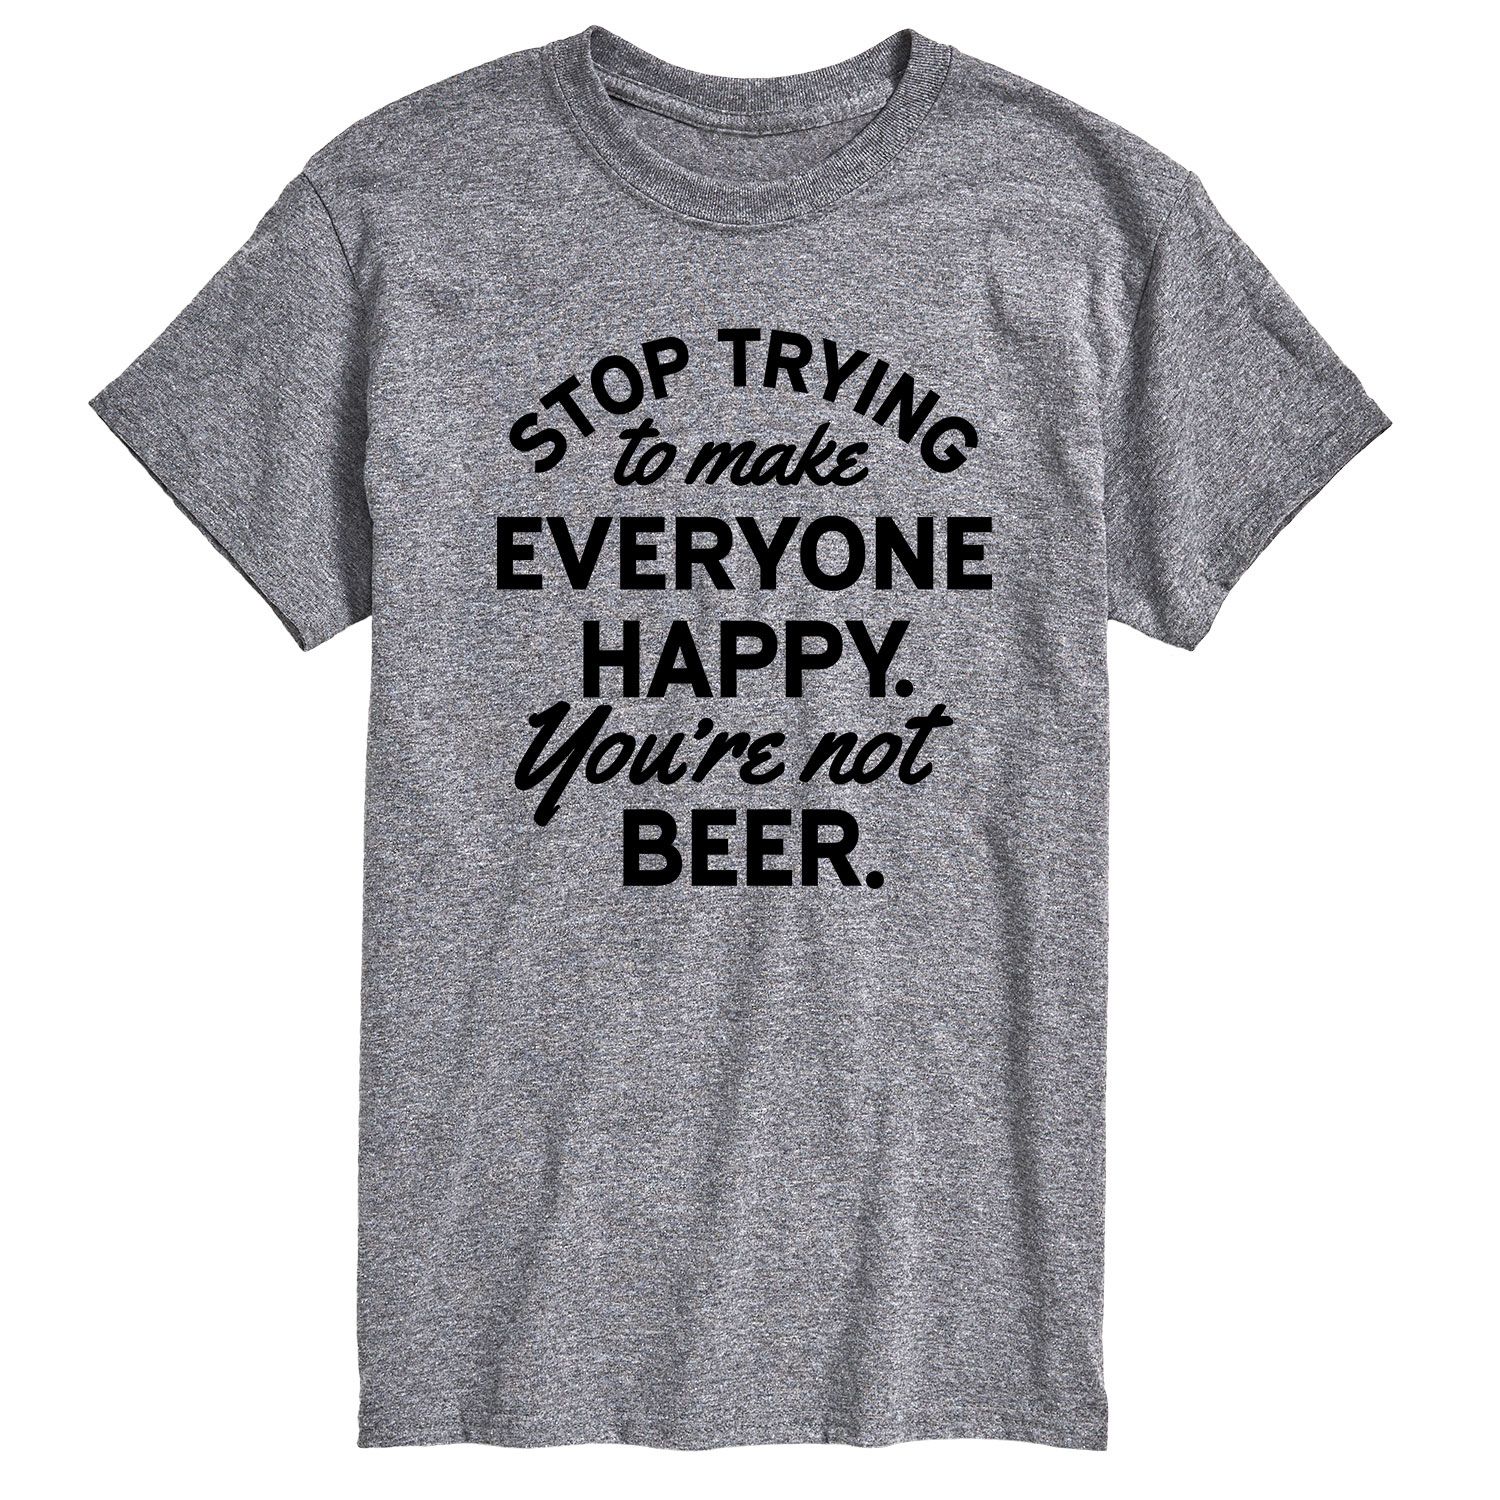 Мужская футболка с рисунком You're Not Beer Licensed Character